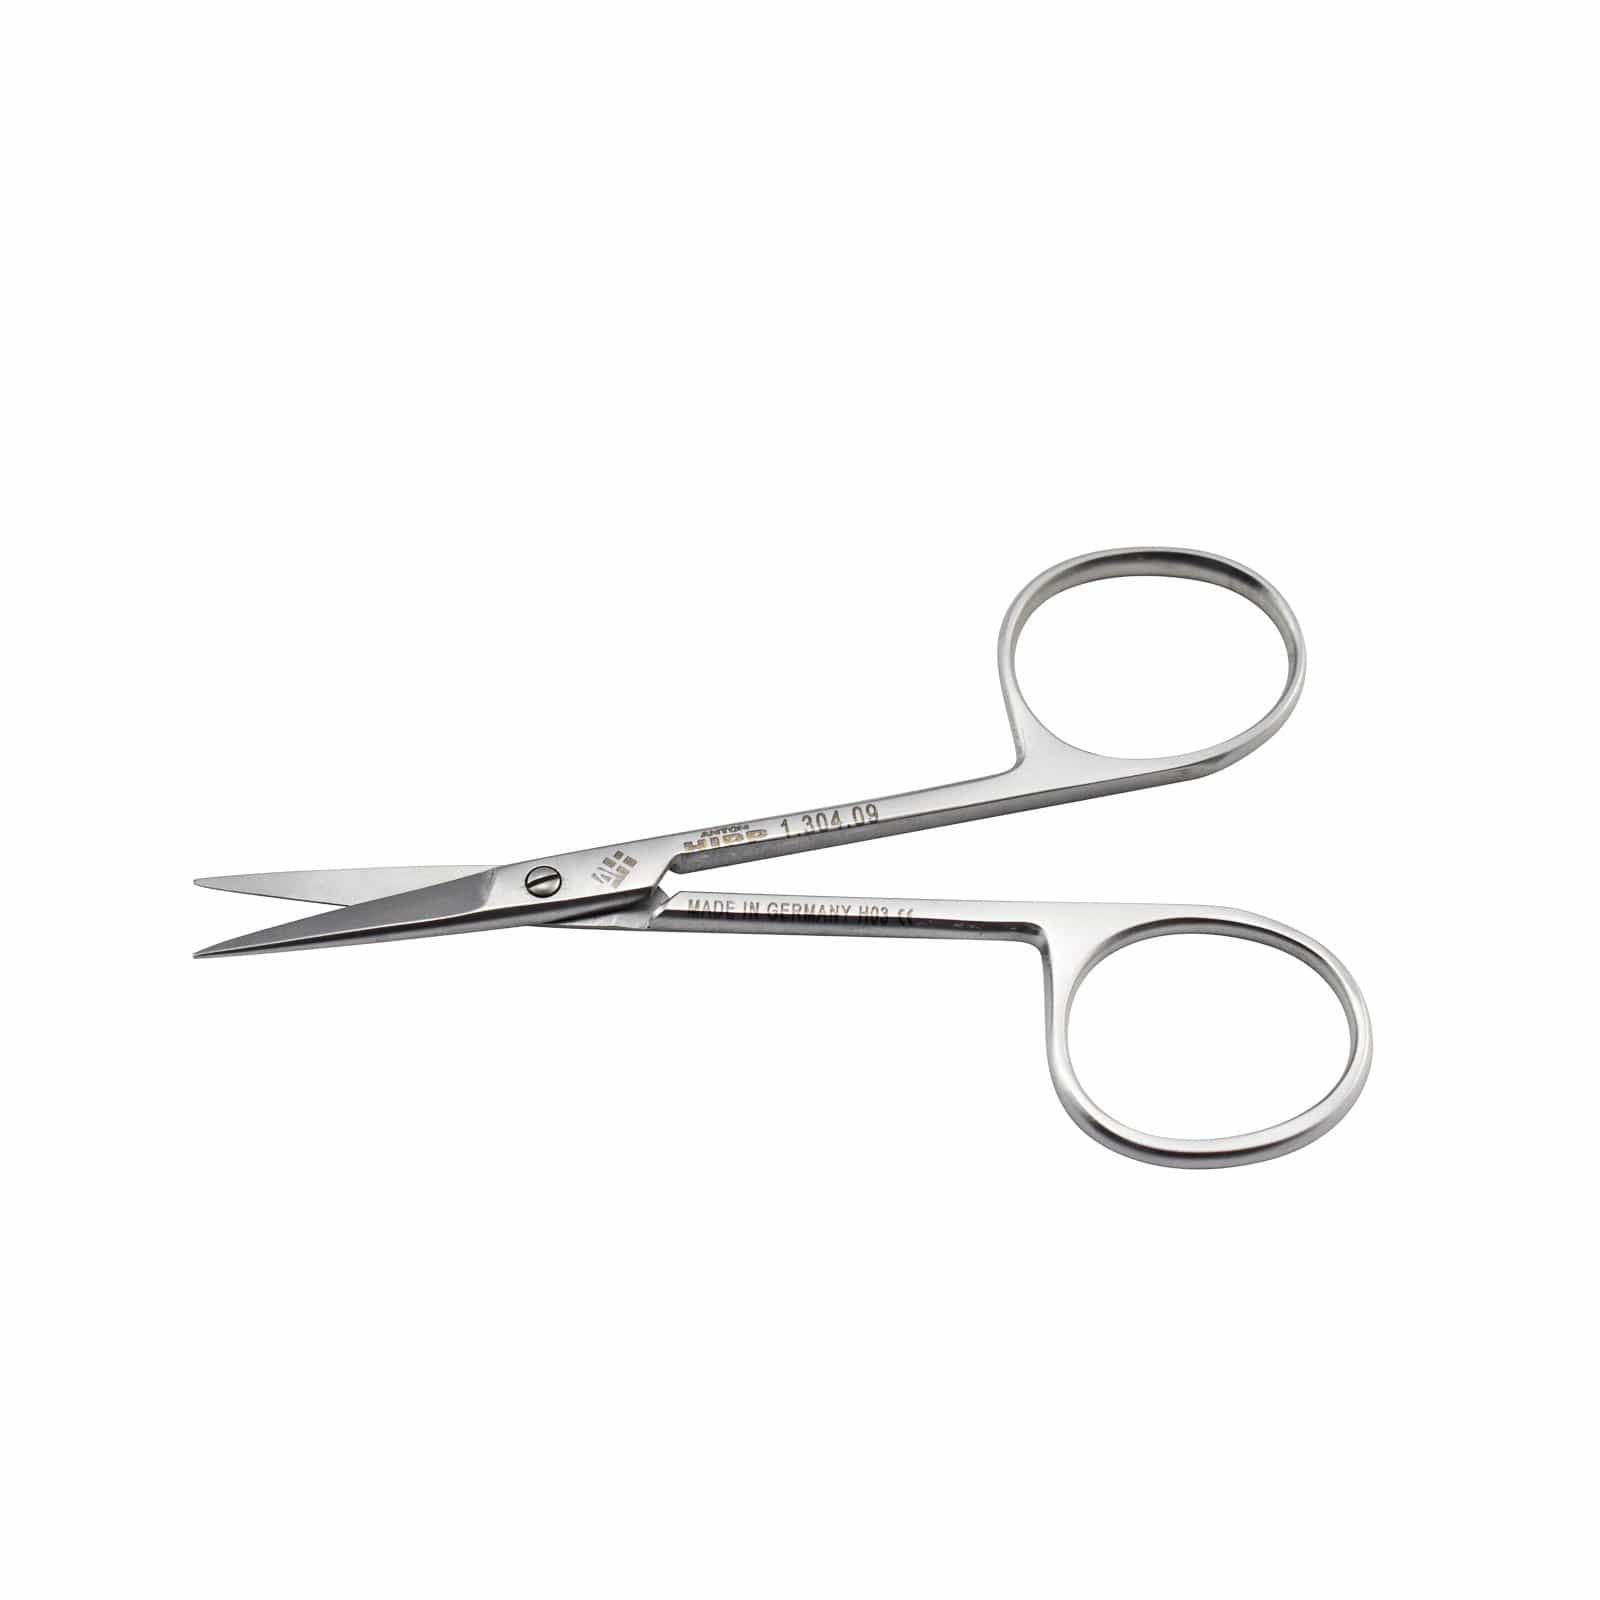 Hipp Surgical Instruments Hipp Iris Scissors